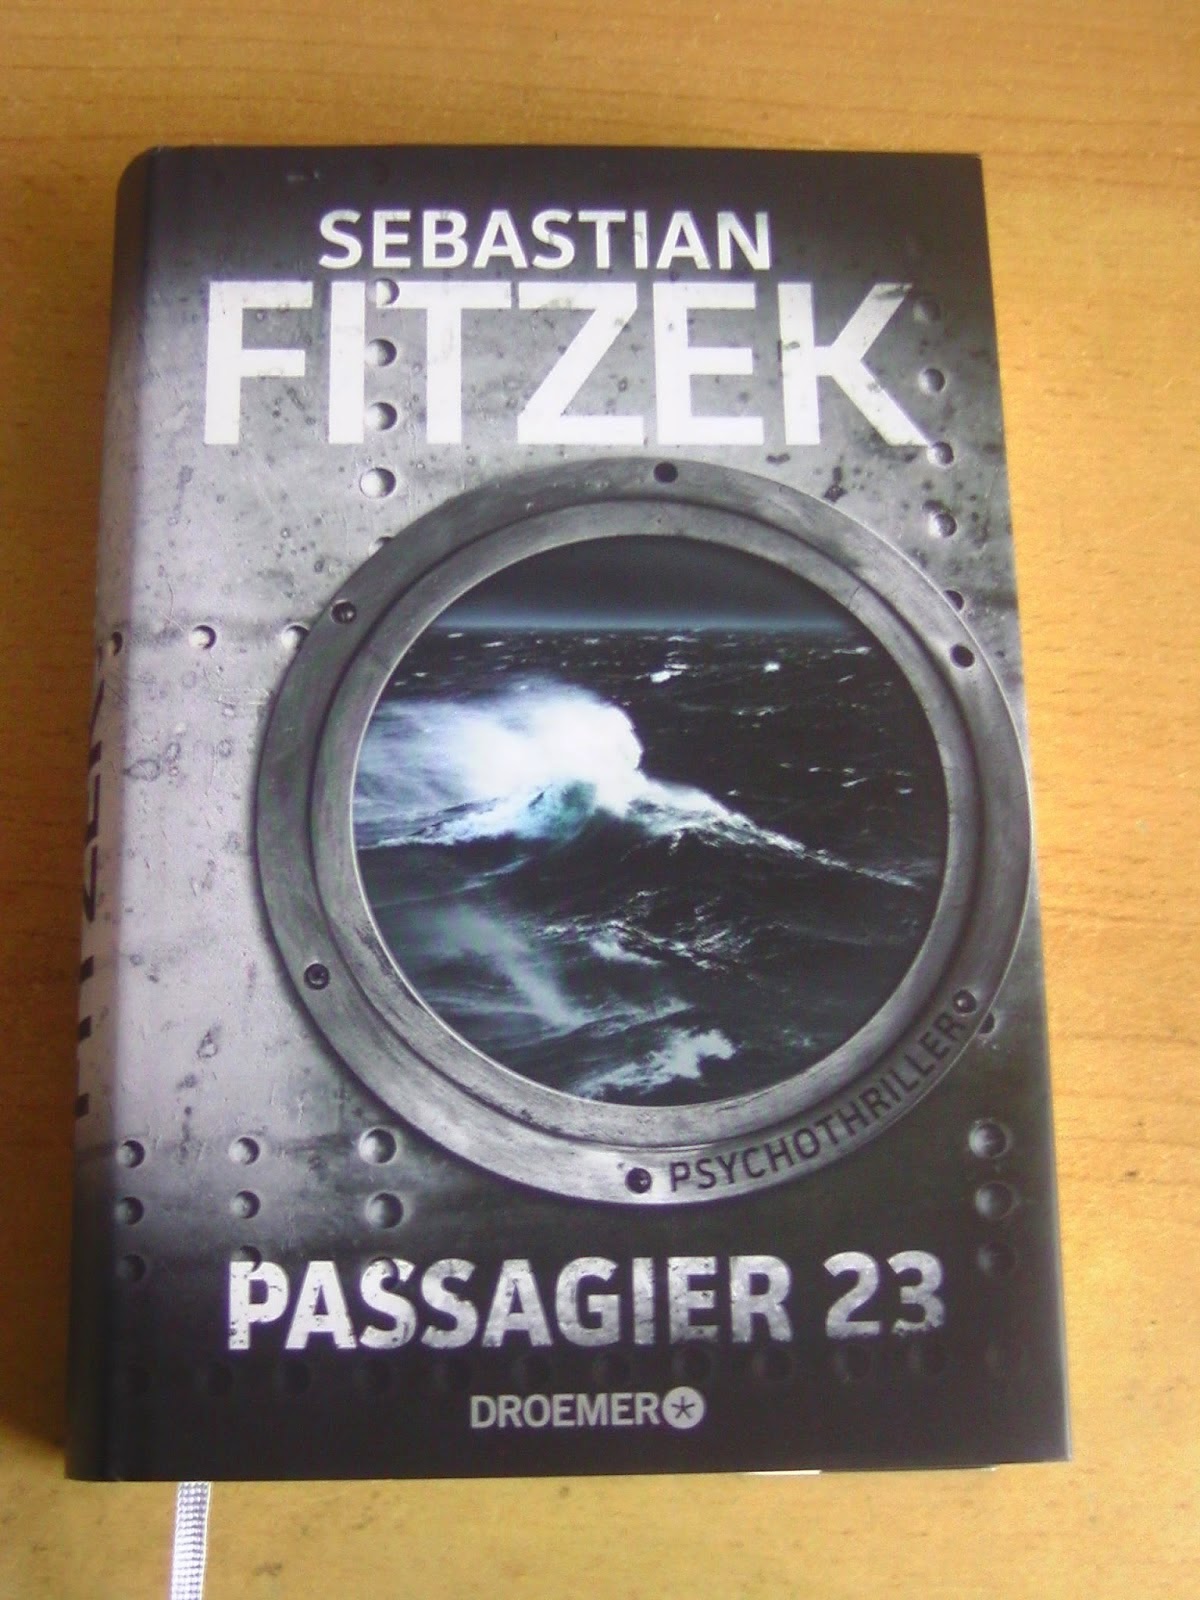 http://www.amazon.de/Passagier-23-Psychothriller-Sebastian-Fitzek/dp/342619919X